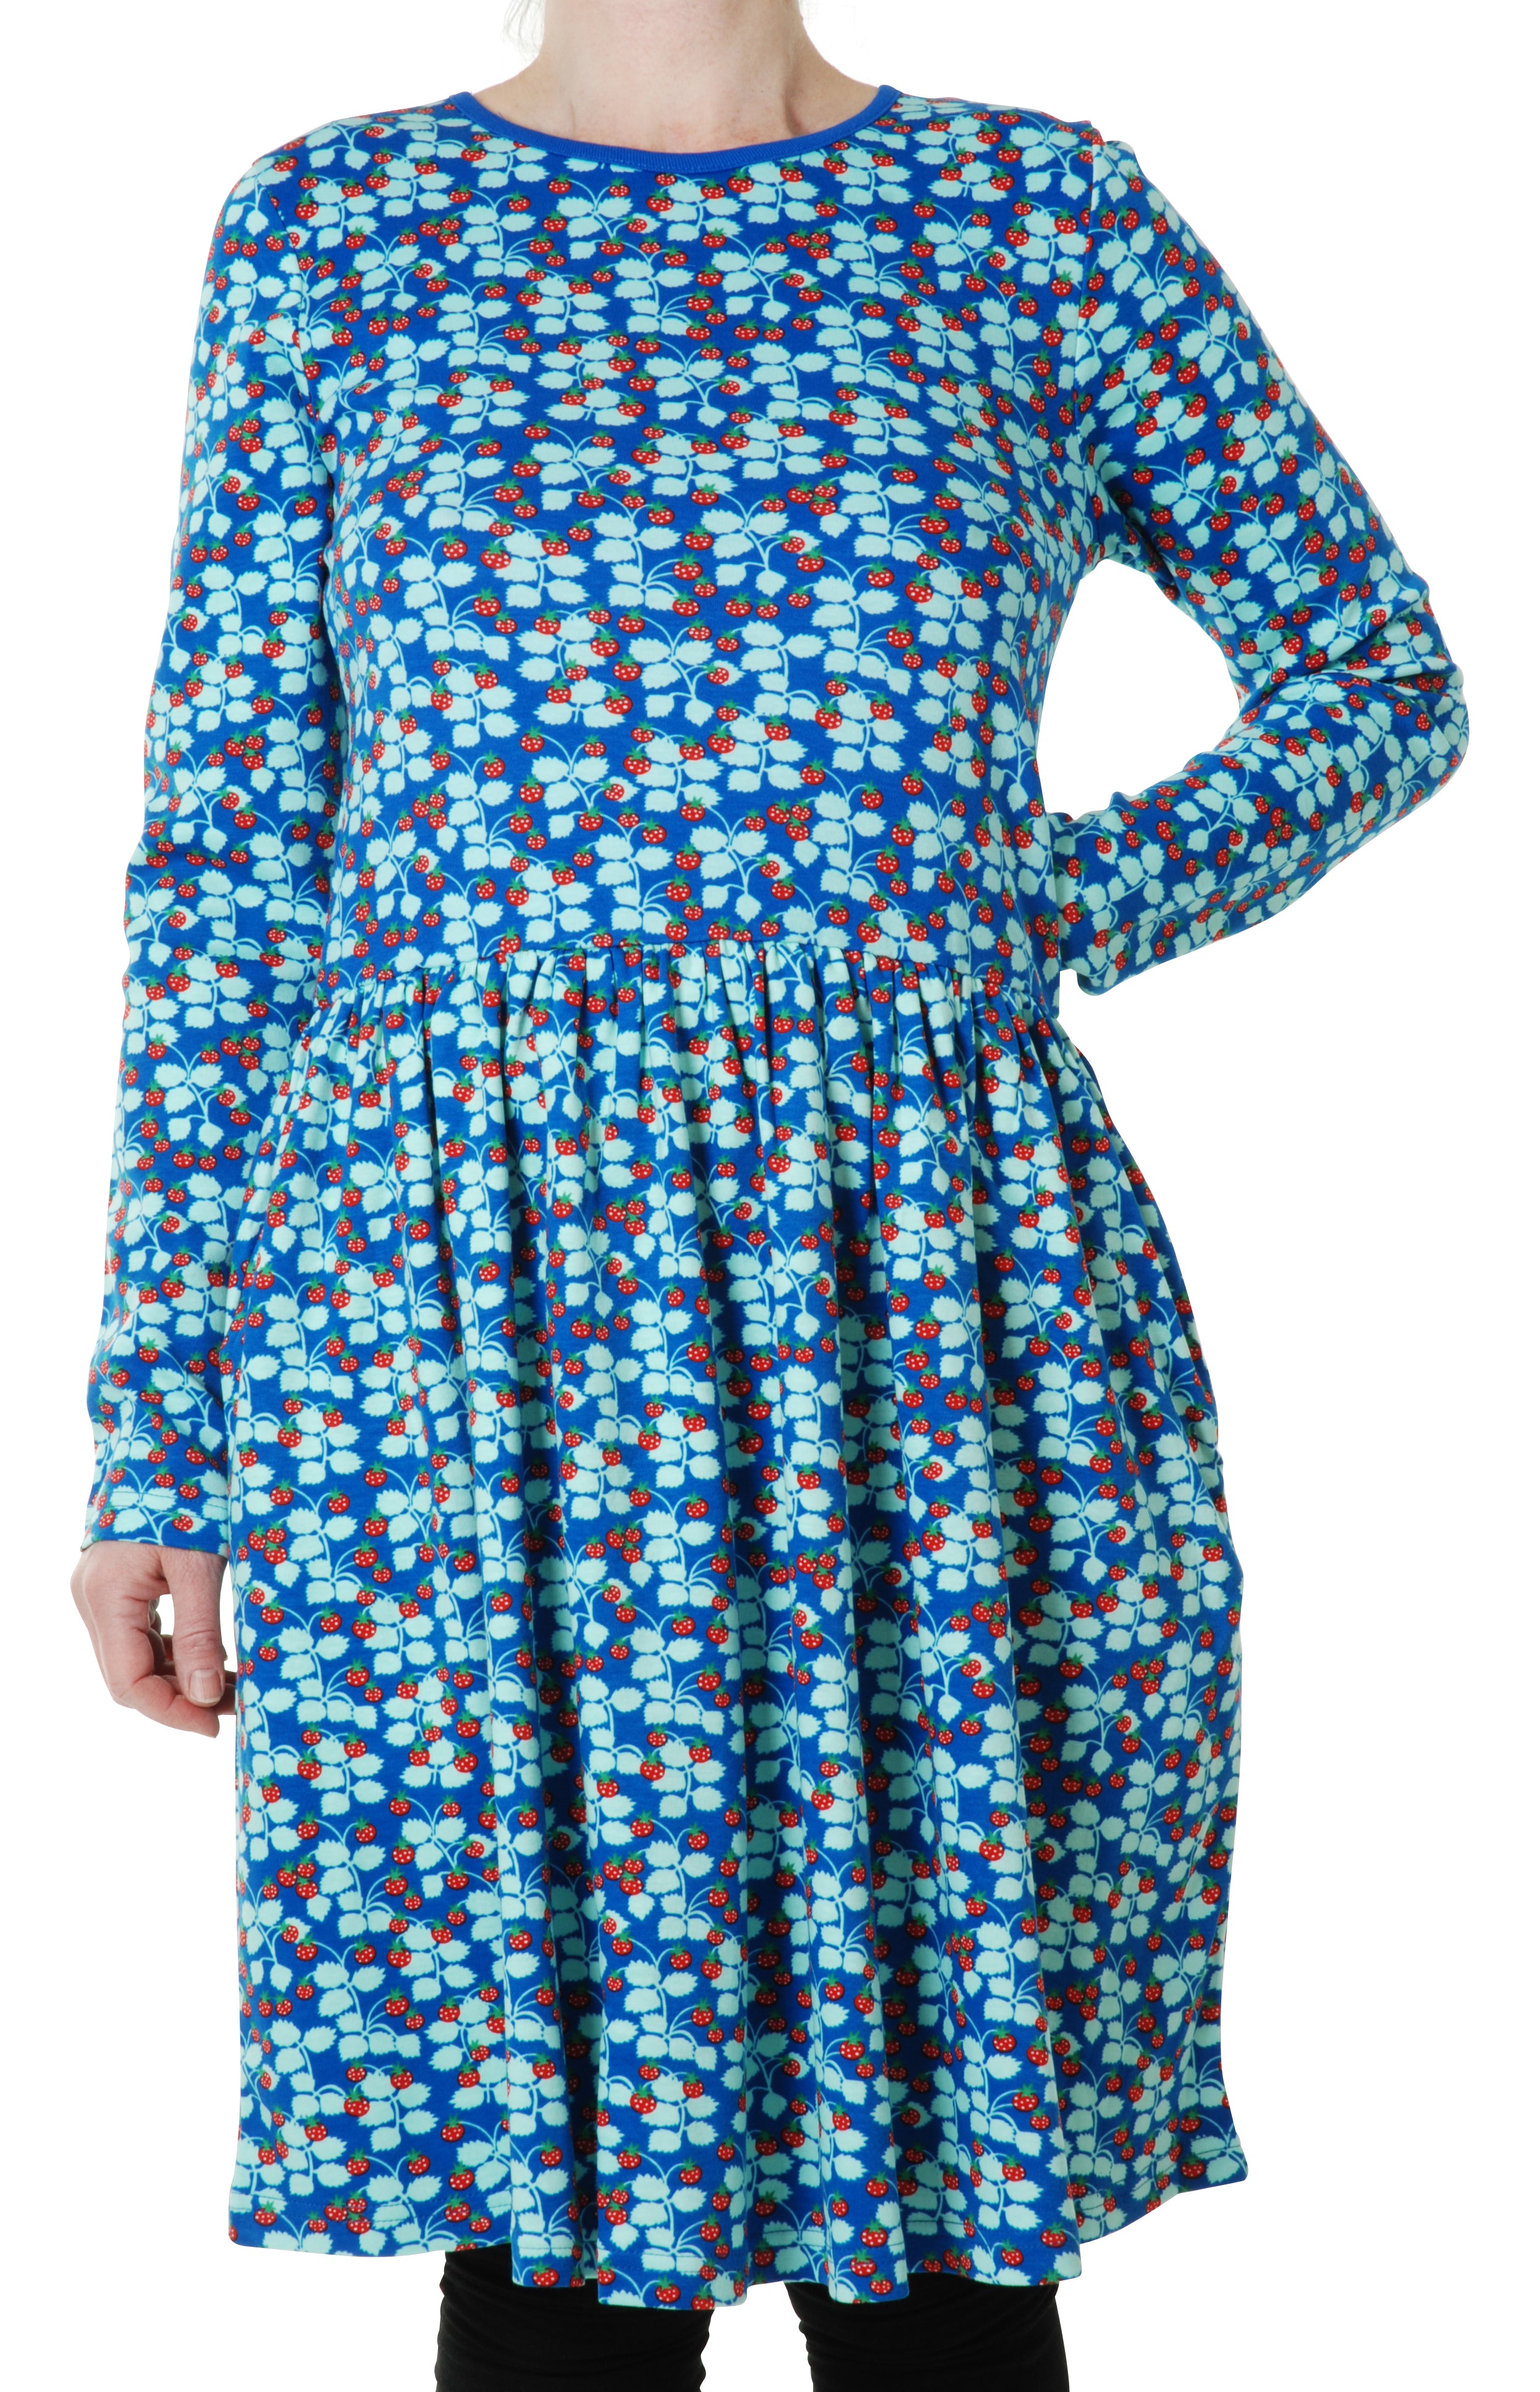 Adult Jurk / Long Sleeve Dress With Gathered Skirt Wild Strawberries Blue XS-4XL - Duns Sweden